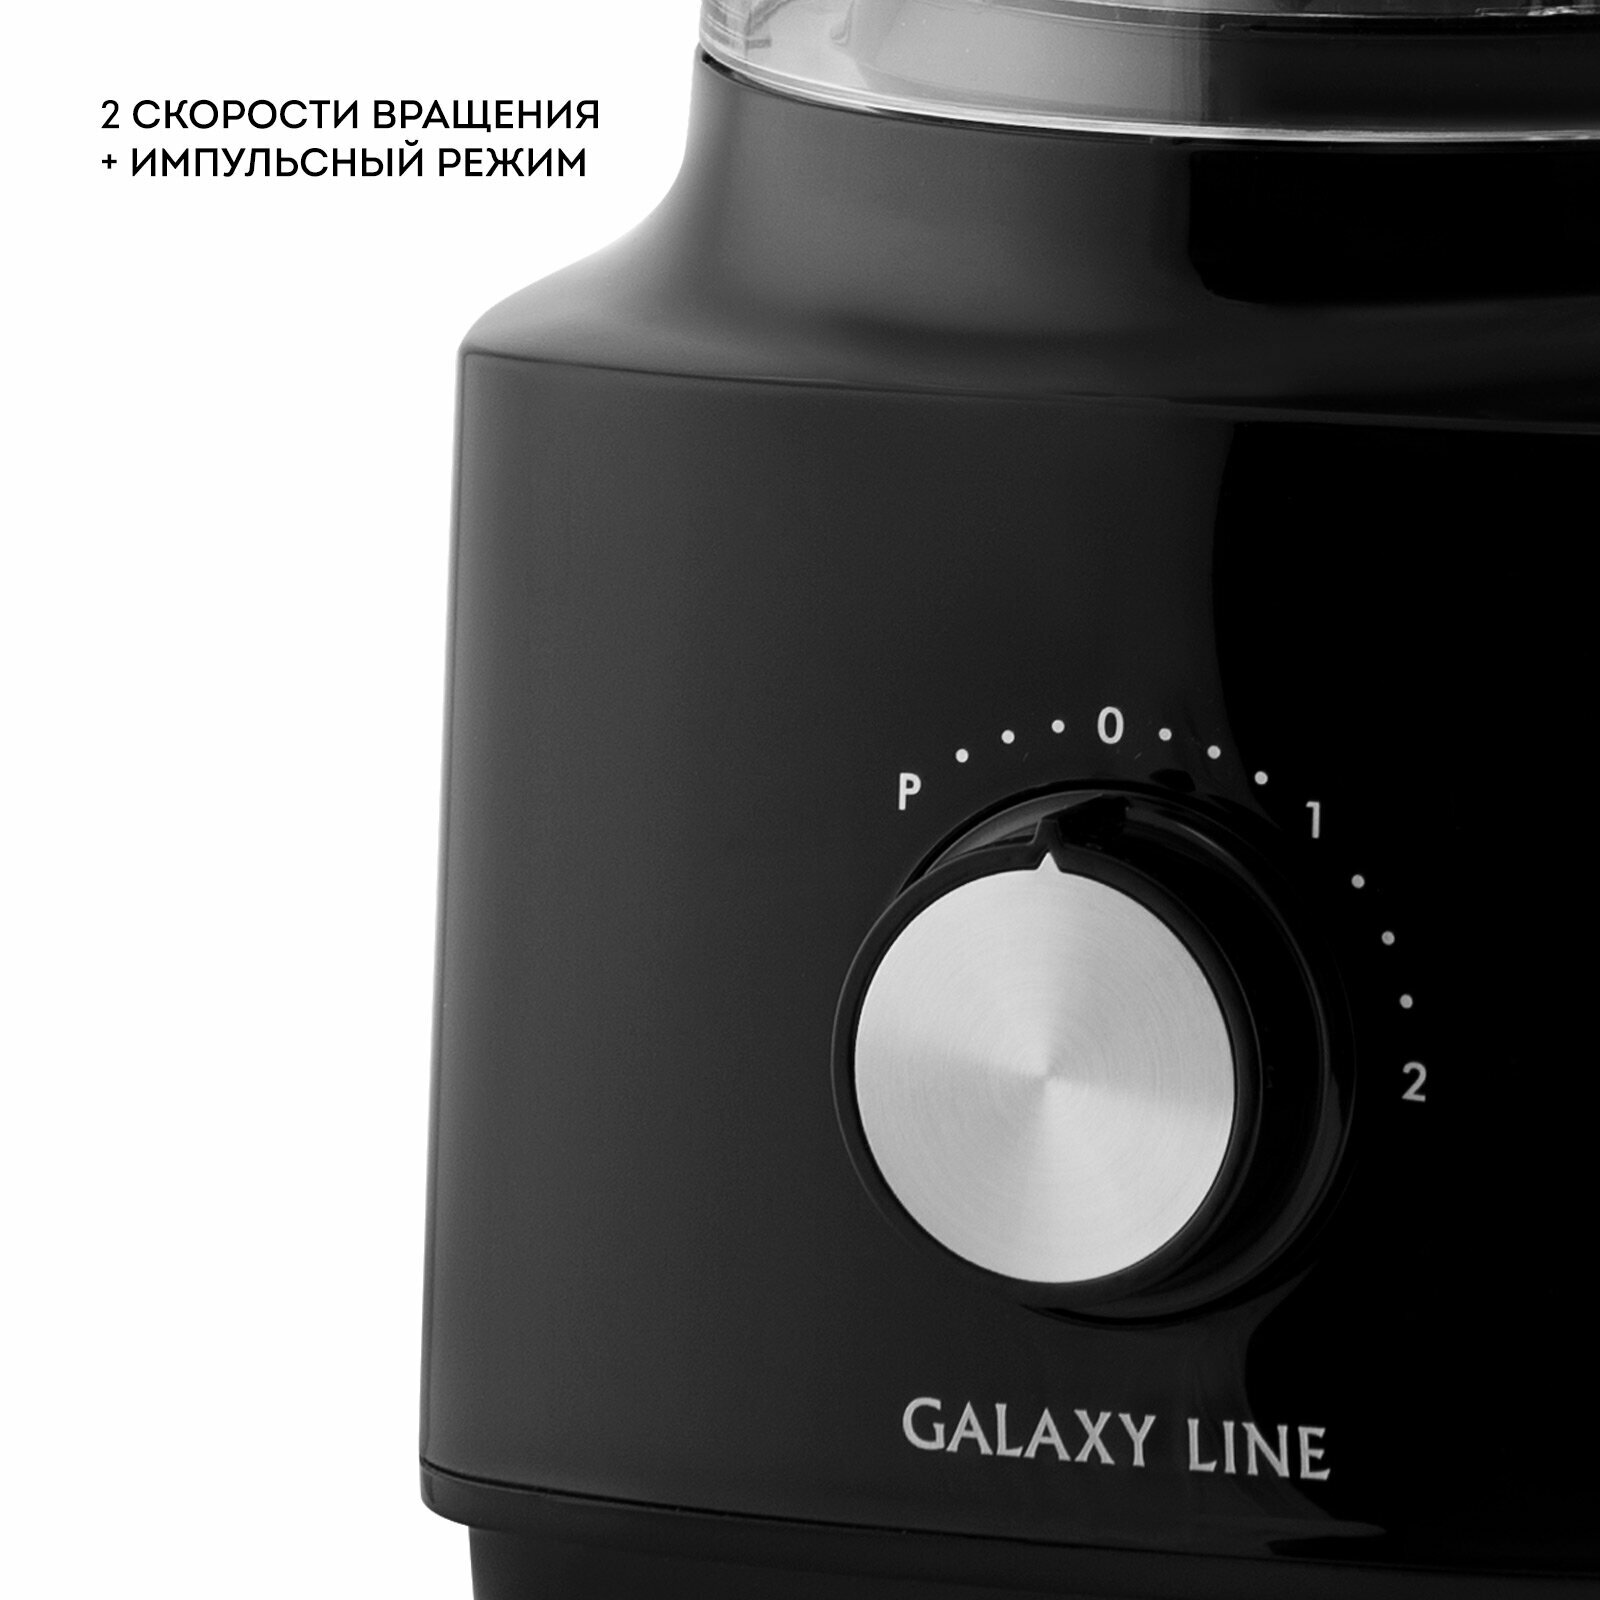 Кухонный комбайн Galaxy Line GL 2313 1000Вт черный